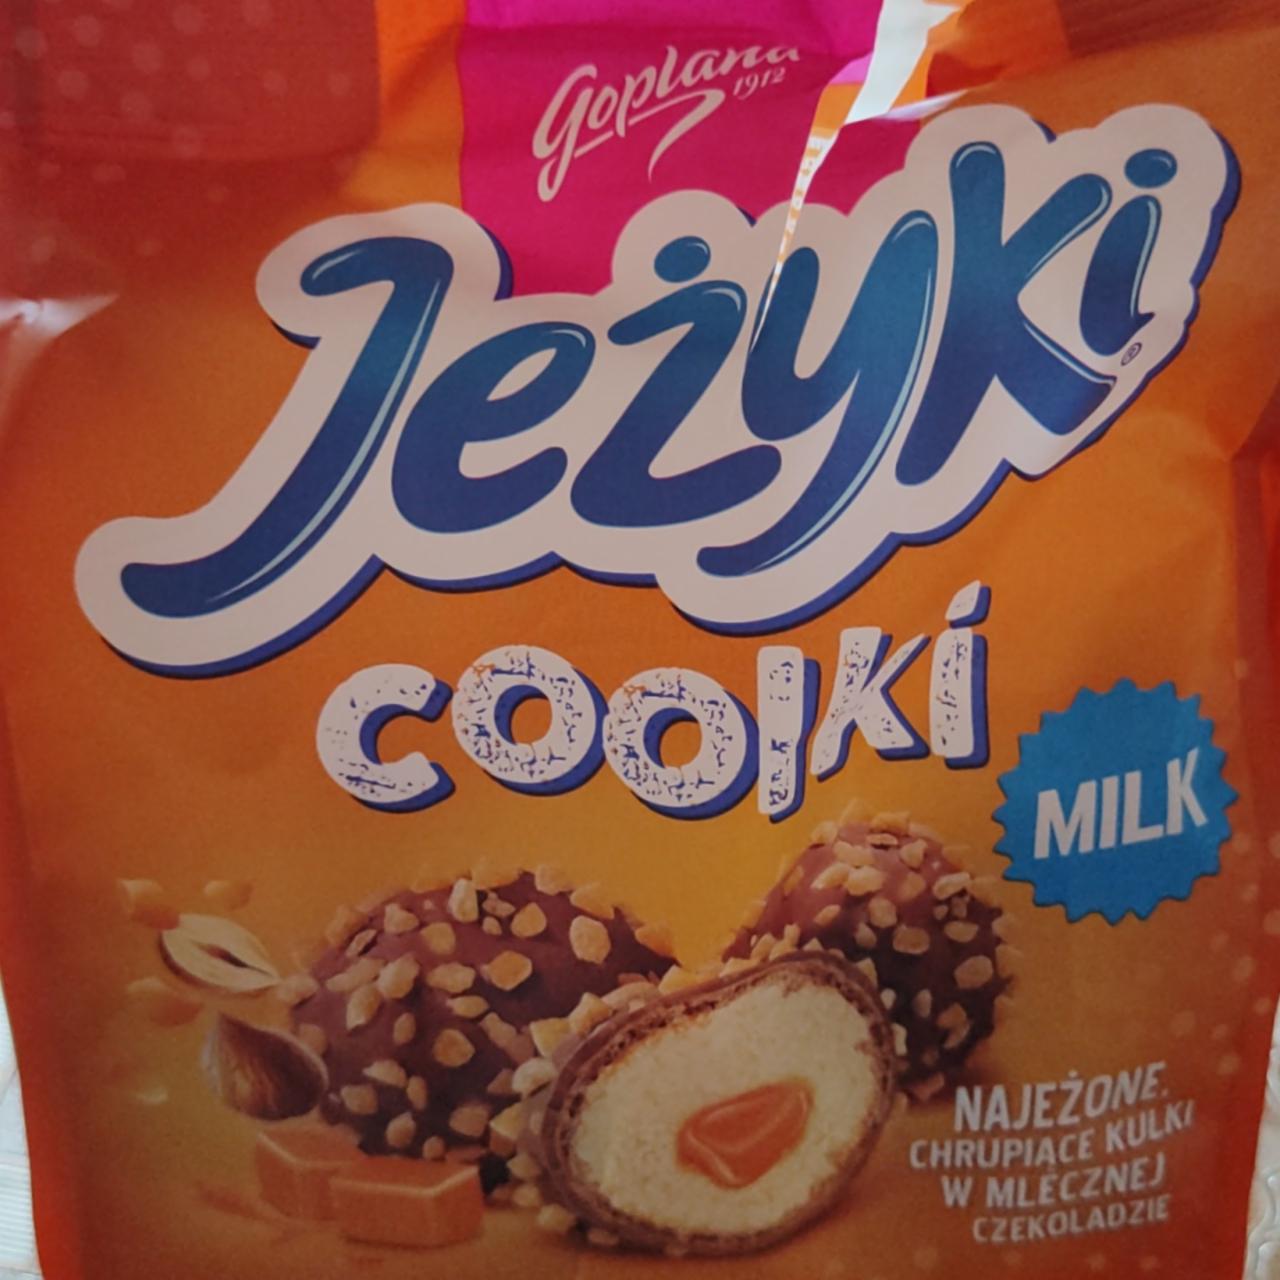 Фото - конфеты Jezuki молочные фундук - карамель Goplana